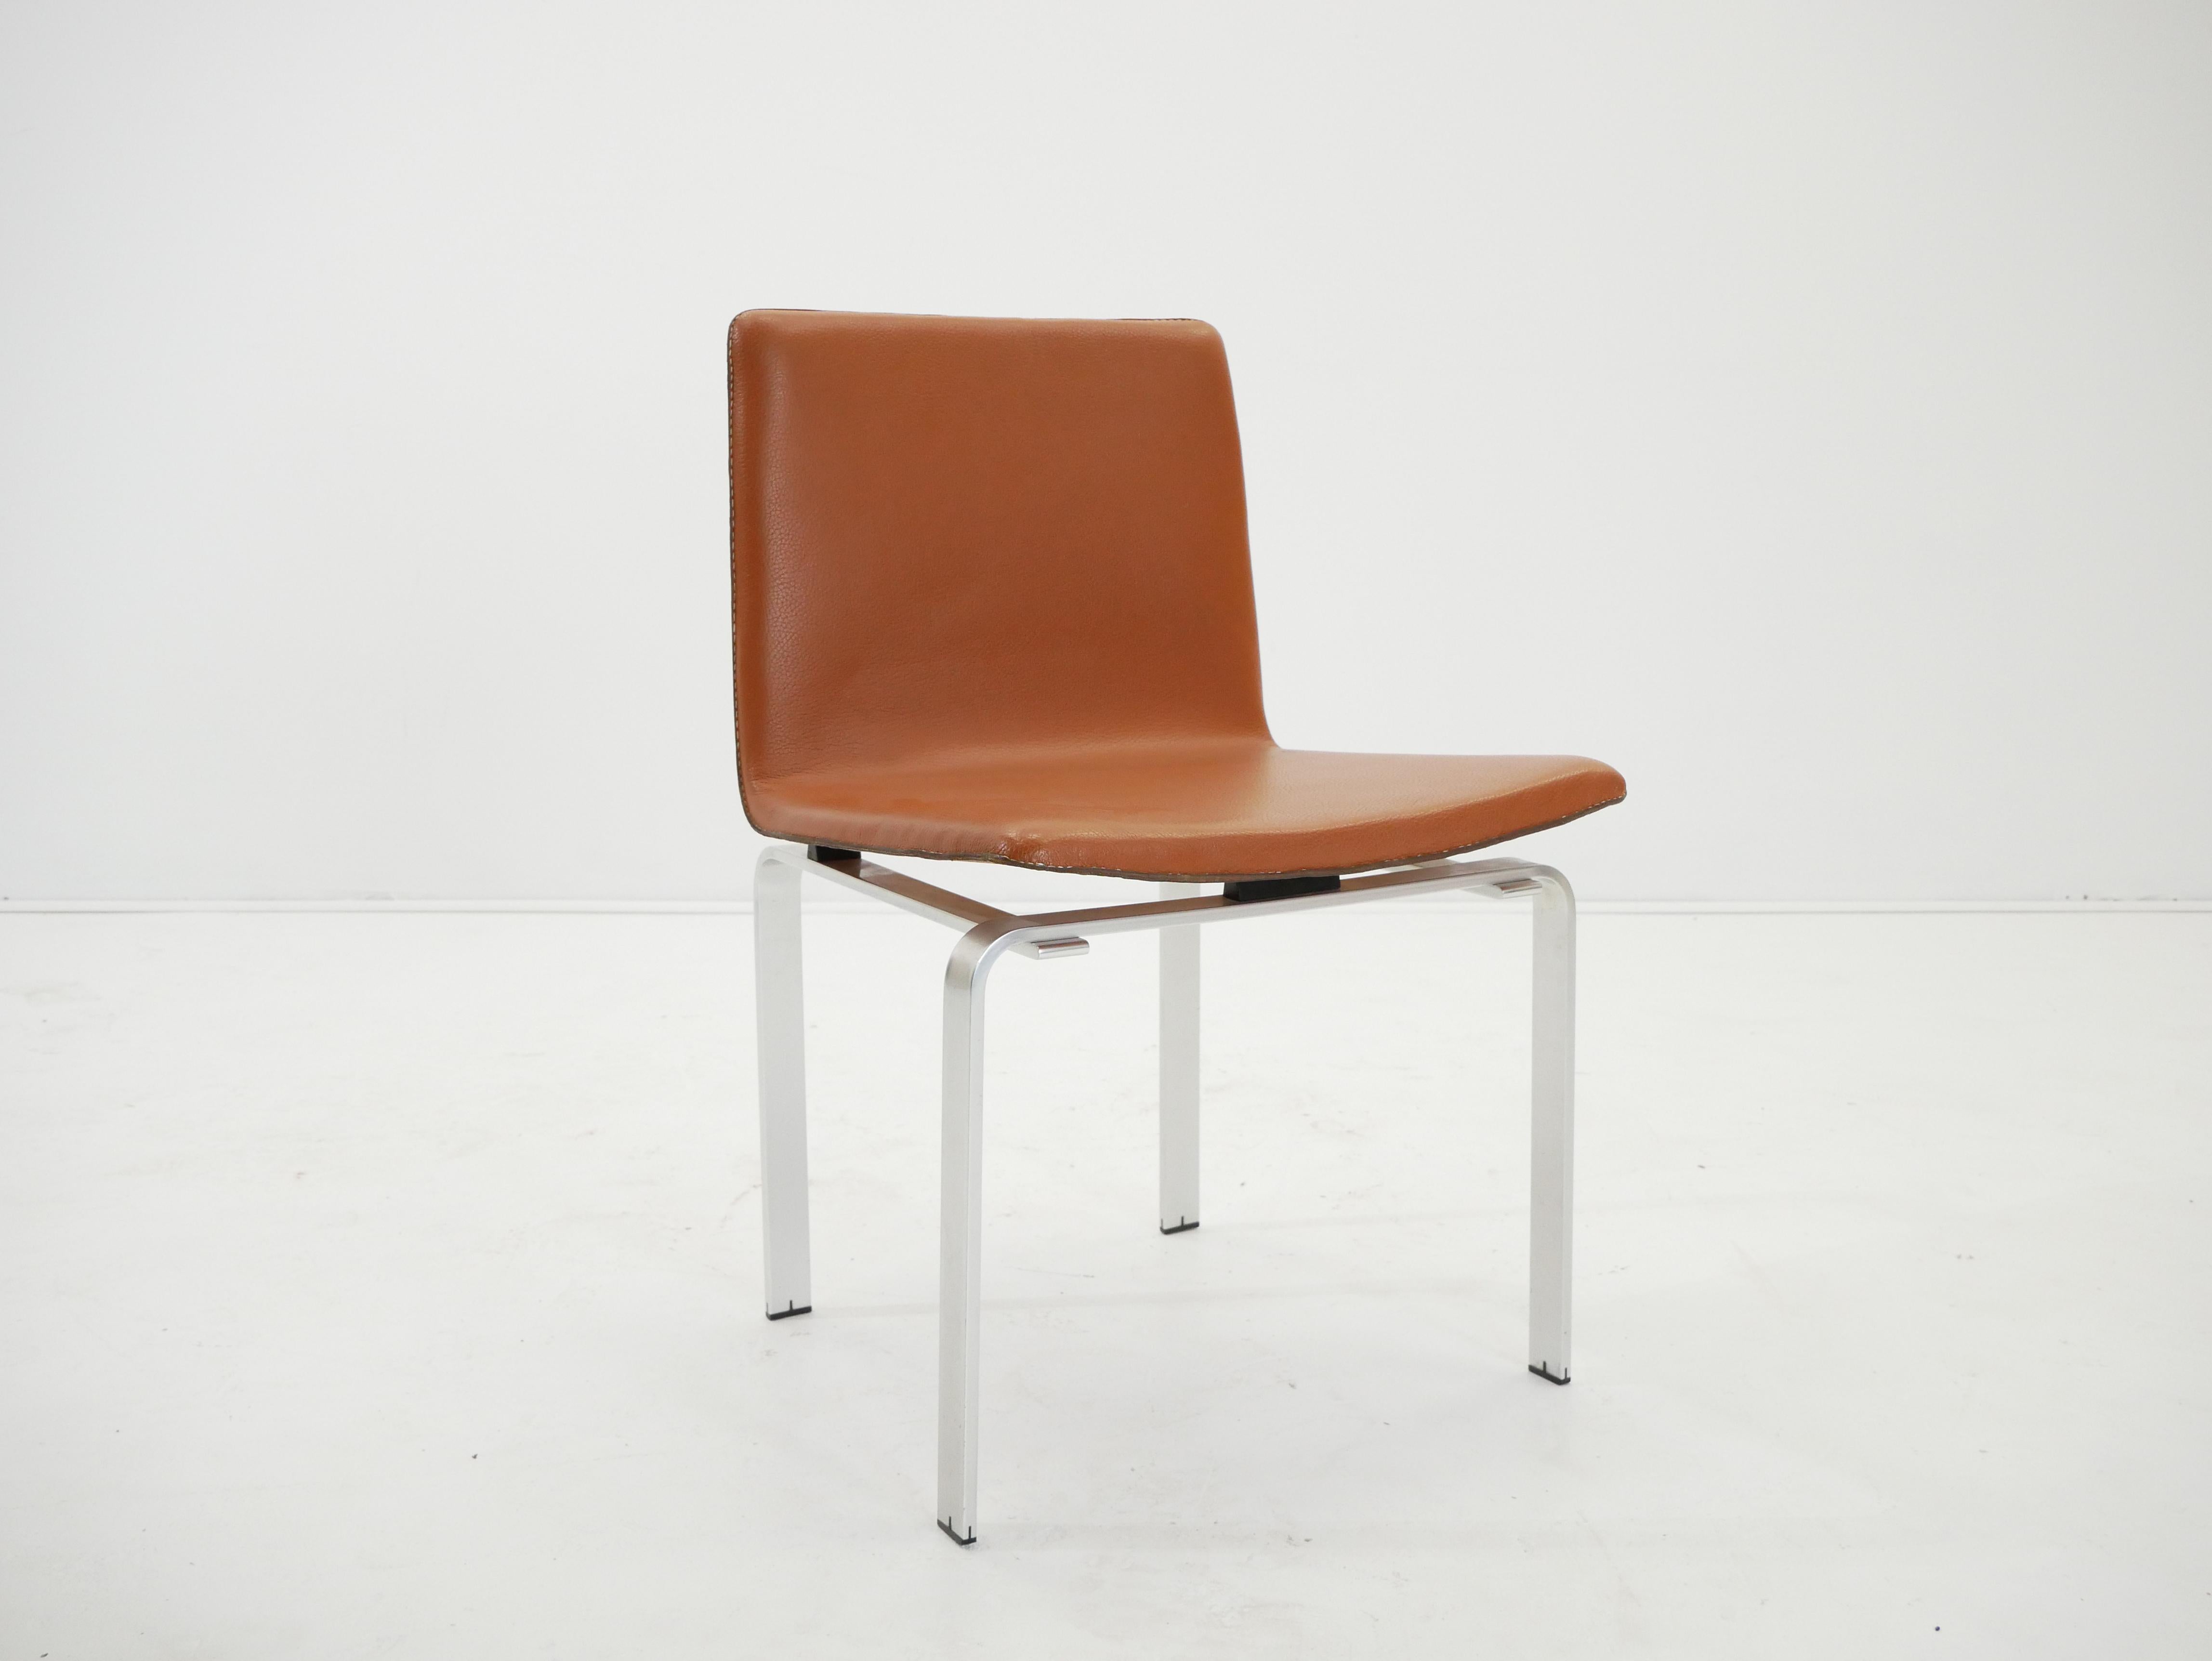 Jorgen Hoj for Niels Vitsoe chair in brushed aluminum and orange Leather, designed in Denmark c. 1962.